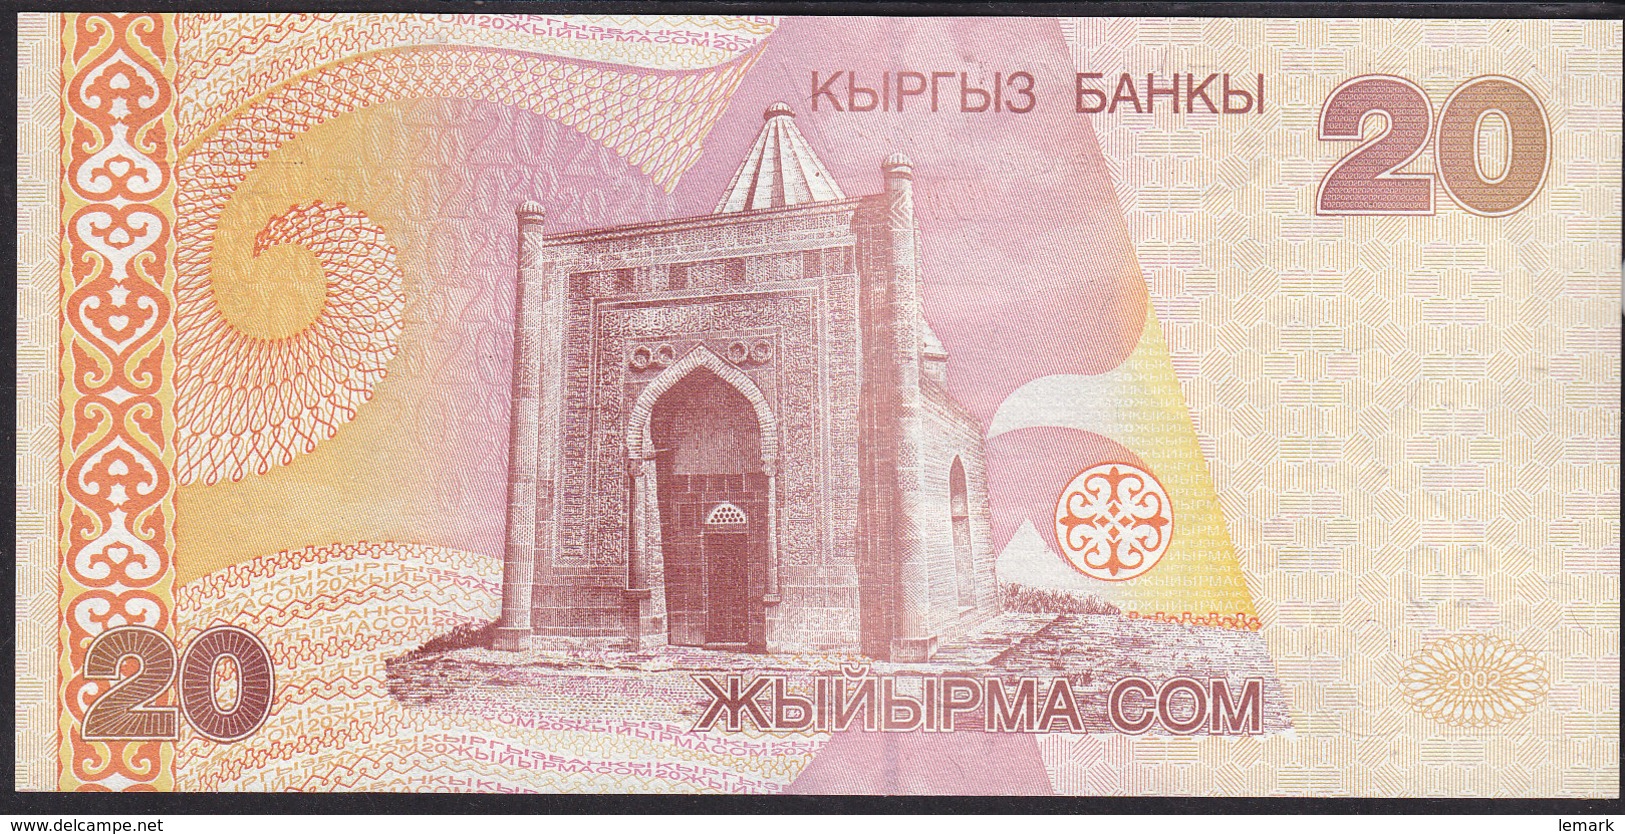 Kyrgyzstan 20 Som 2002 P19 UNC - Kirghizistan